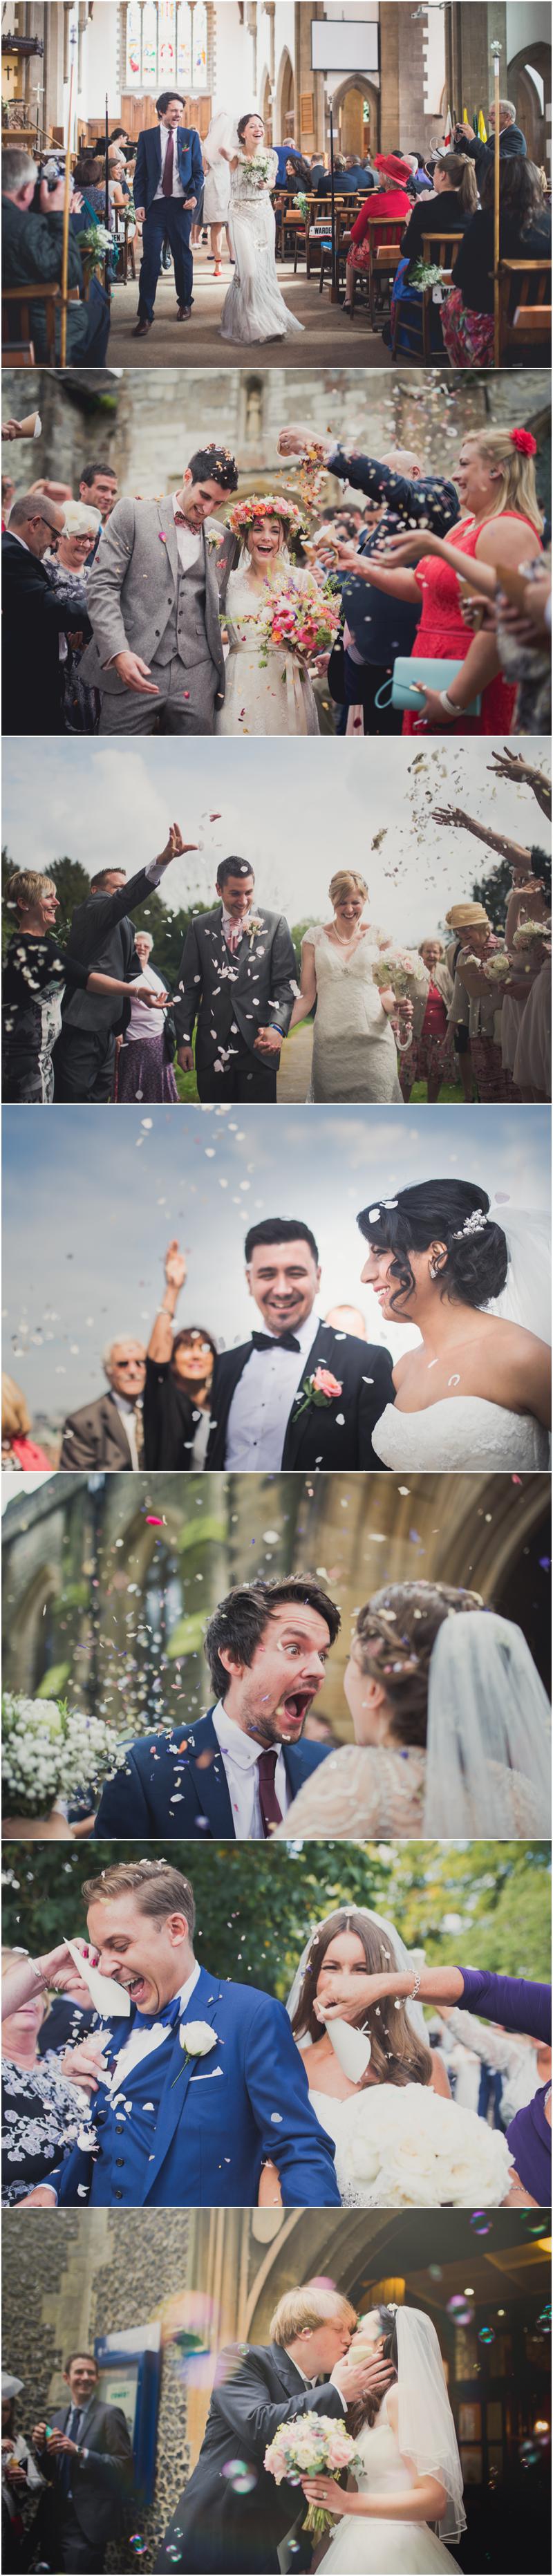 london wedding photographer-confetti (6 of 7).jpg